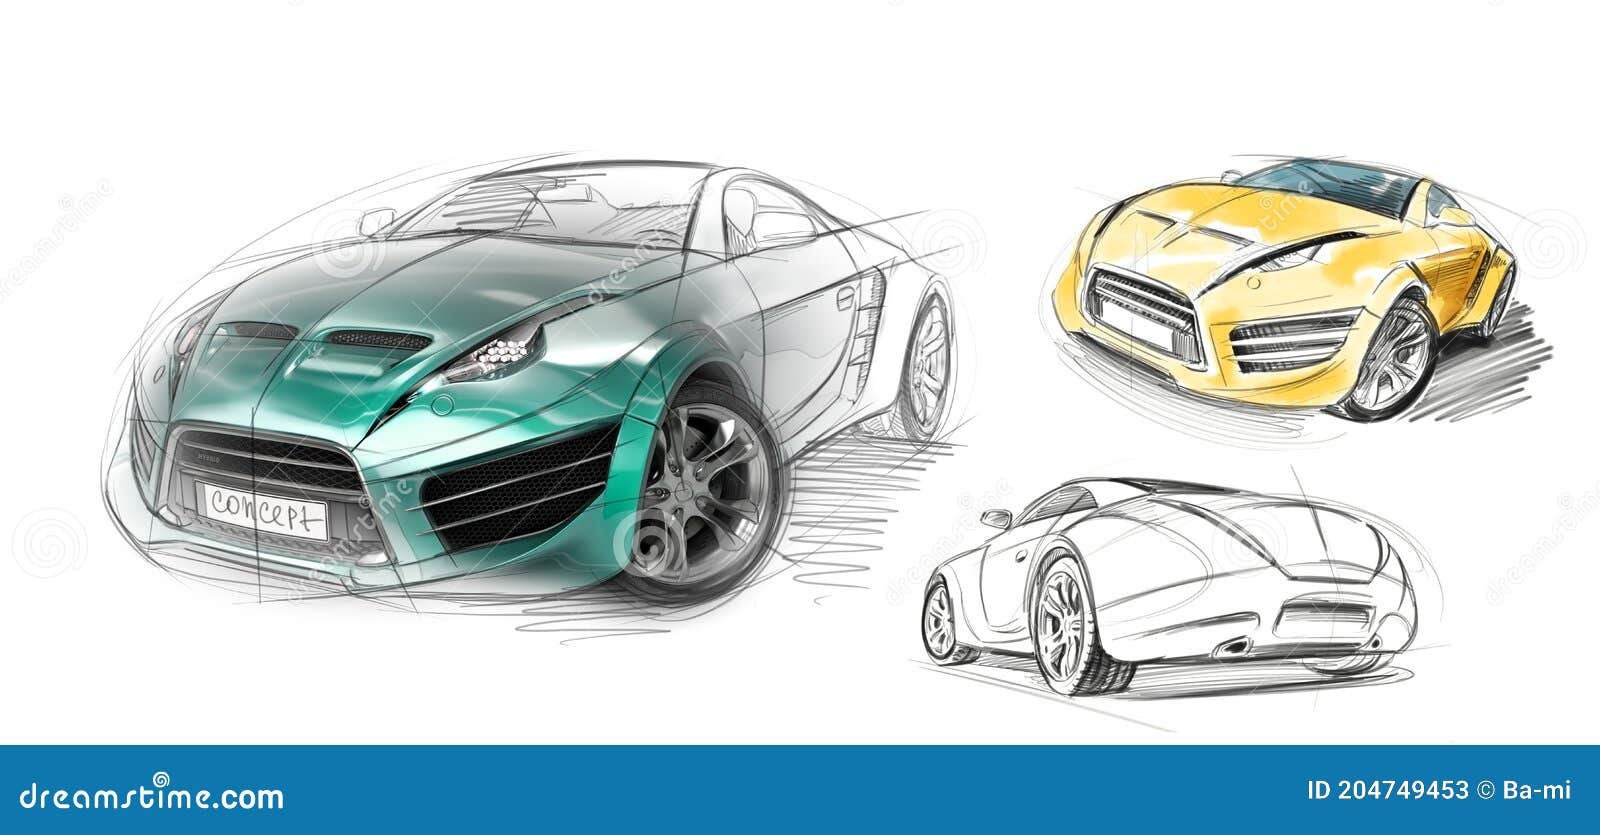 Car Design Sketch Tutorial for a Supercar using Autodesk Alias Studiotools